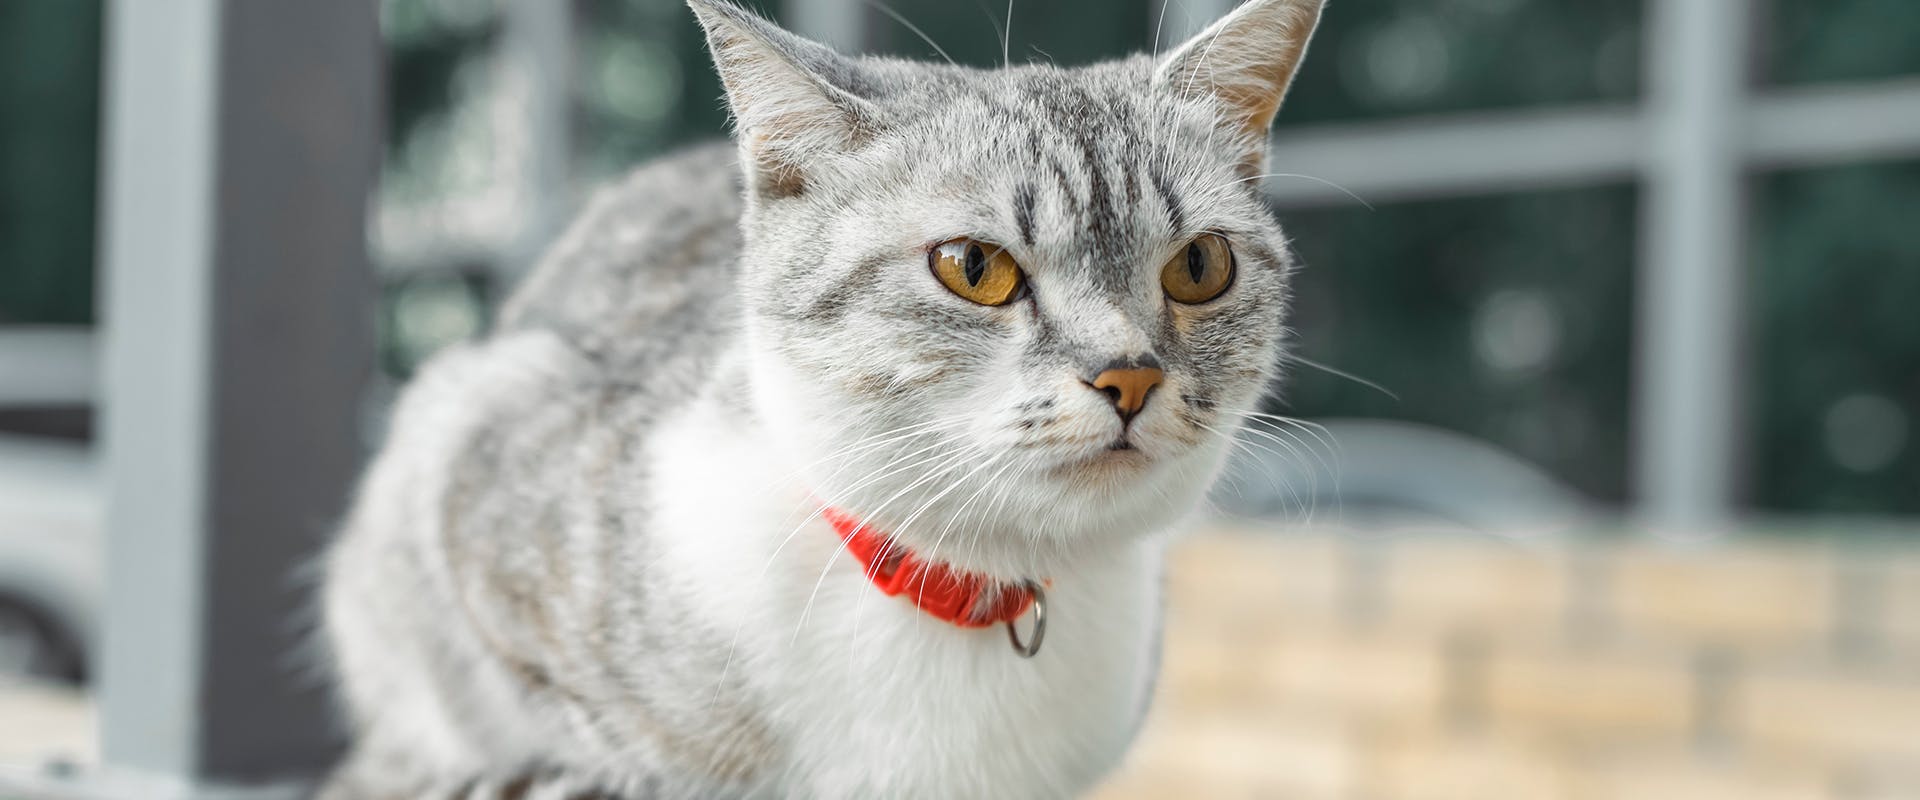 Rare cat breeds - an American Wirehair cat